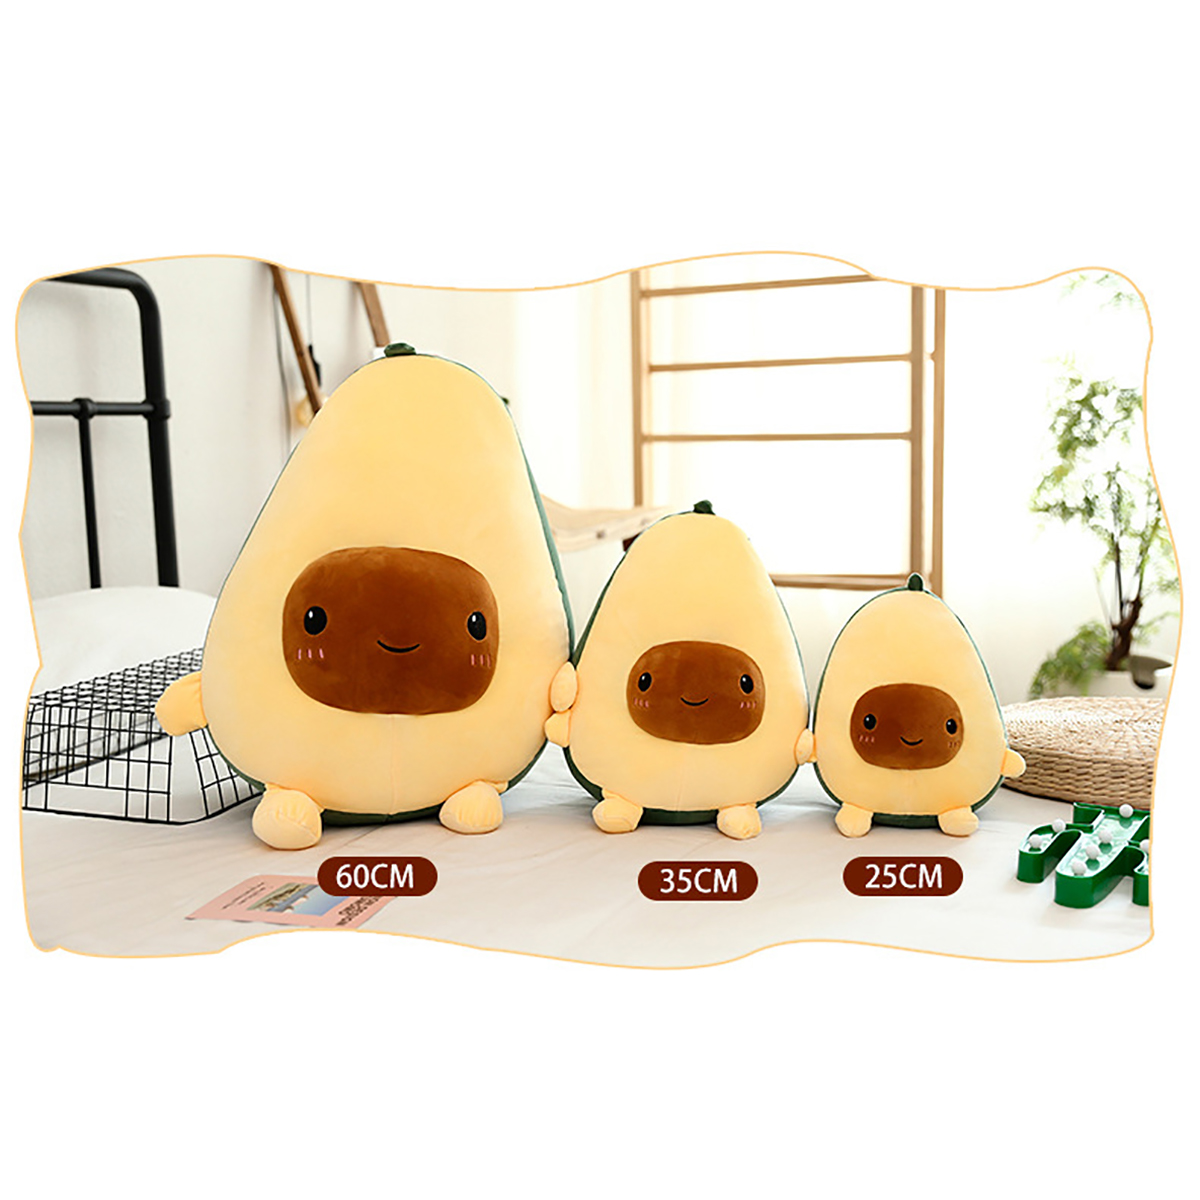 253560CM-Cute-Avocado-Stuffed-Plush-Toy-Soft-Baby-Doll-Cartoon-Fruit-Pillow-Sofa-Cushion-for-Kids-Bi-1627709-12